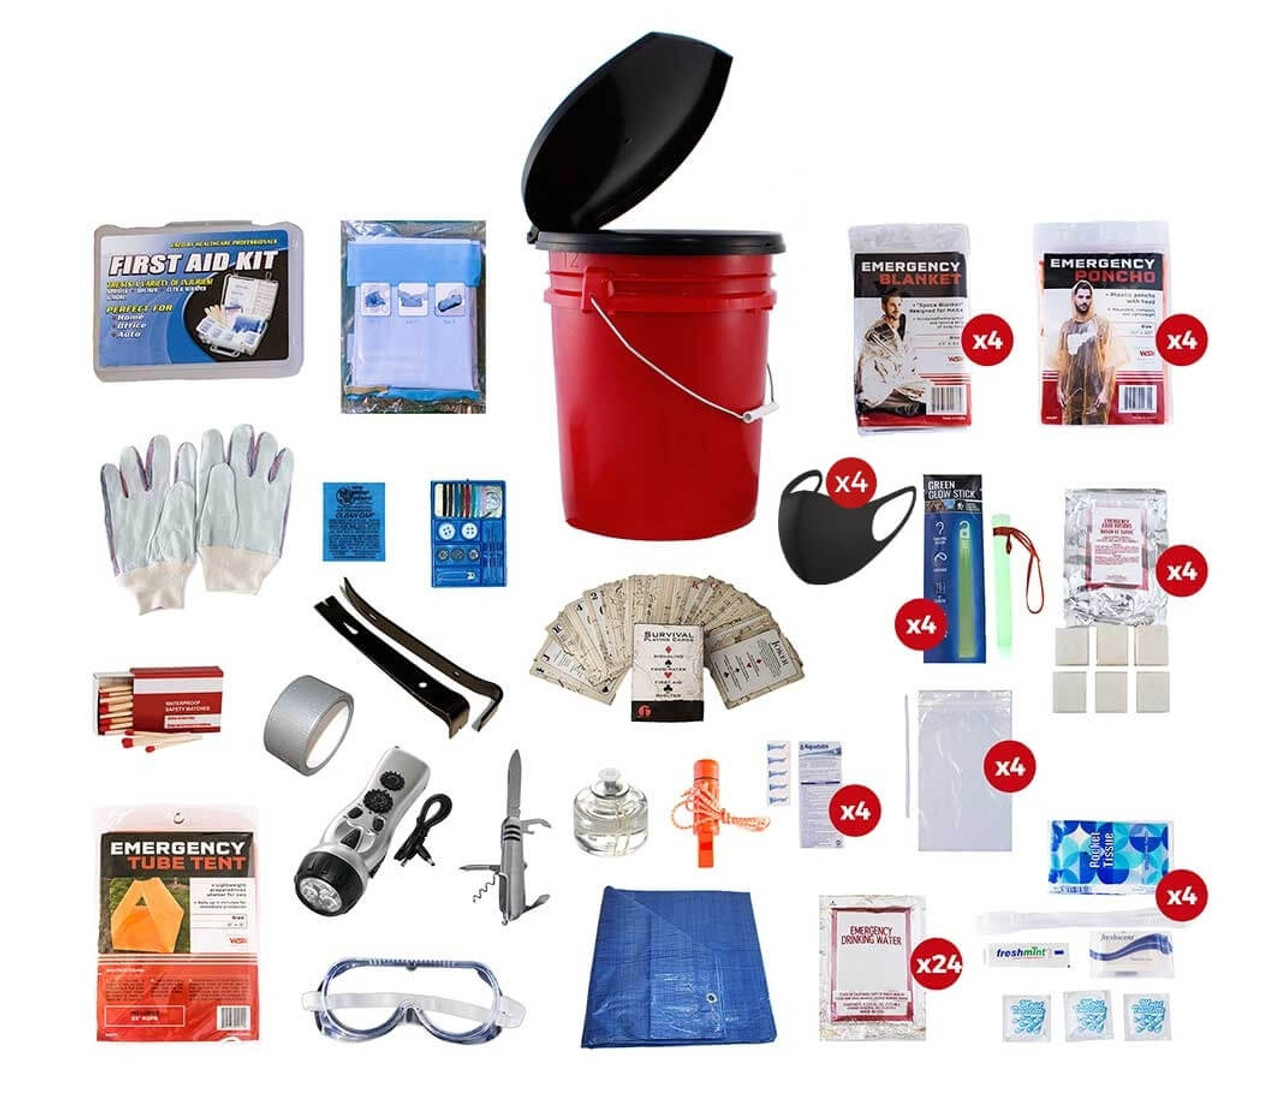 4 Person Survival Kit w/ Lifestraw - Emergency Kit